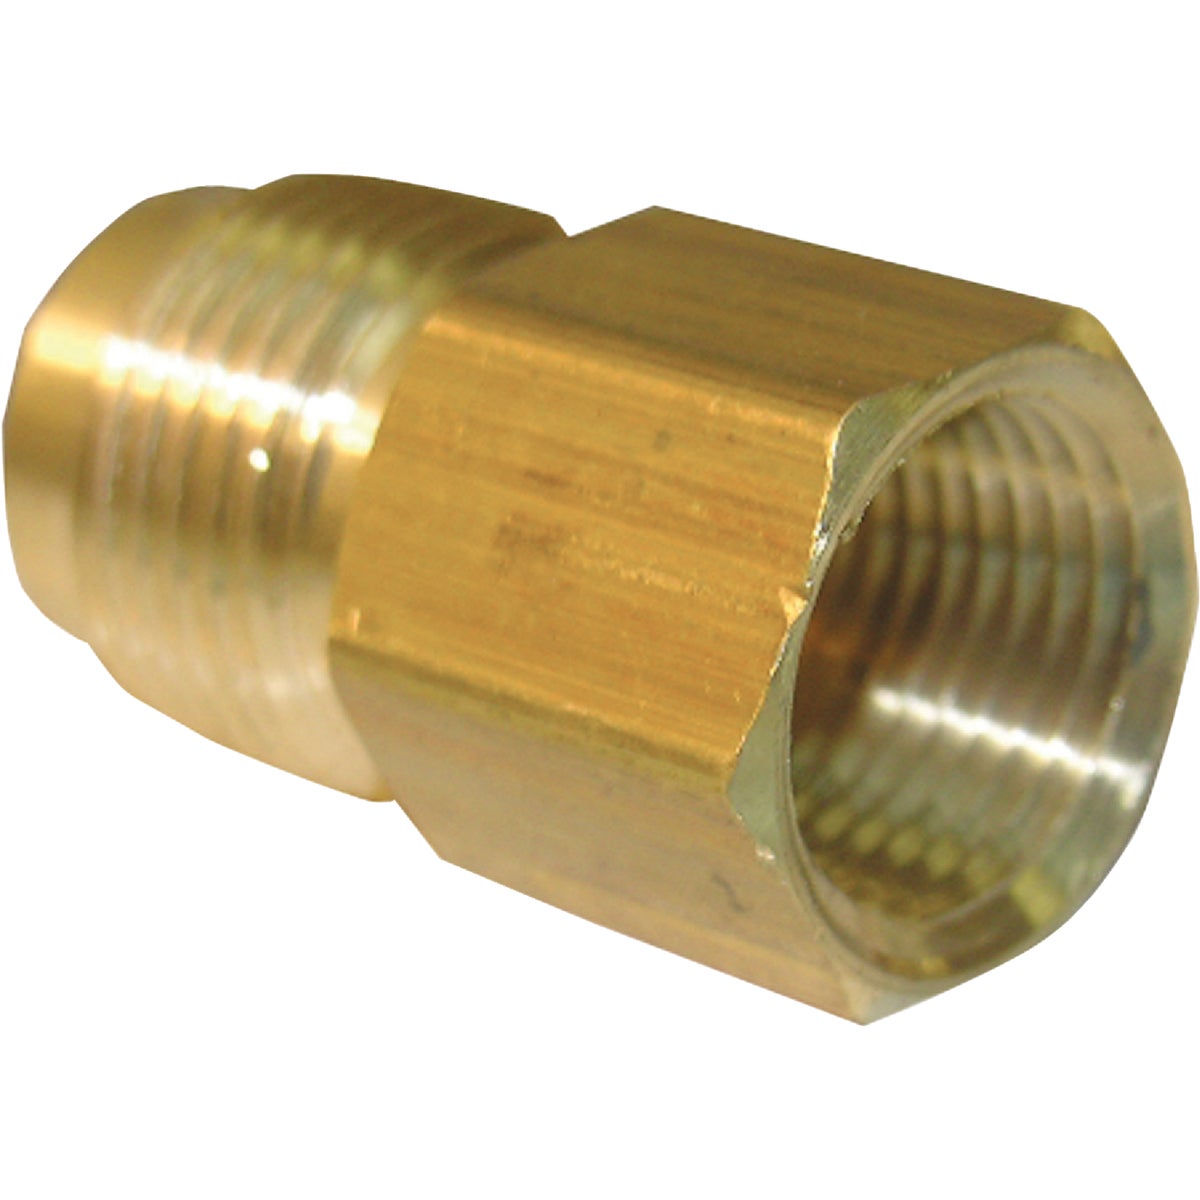 Lasco 1/2 In. M x 1/2 In. FPT Brass Flare Adapter